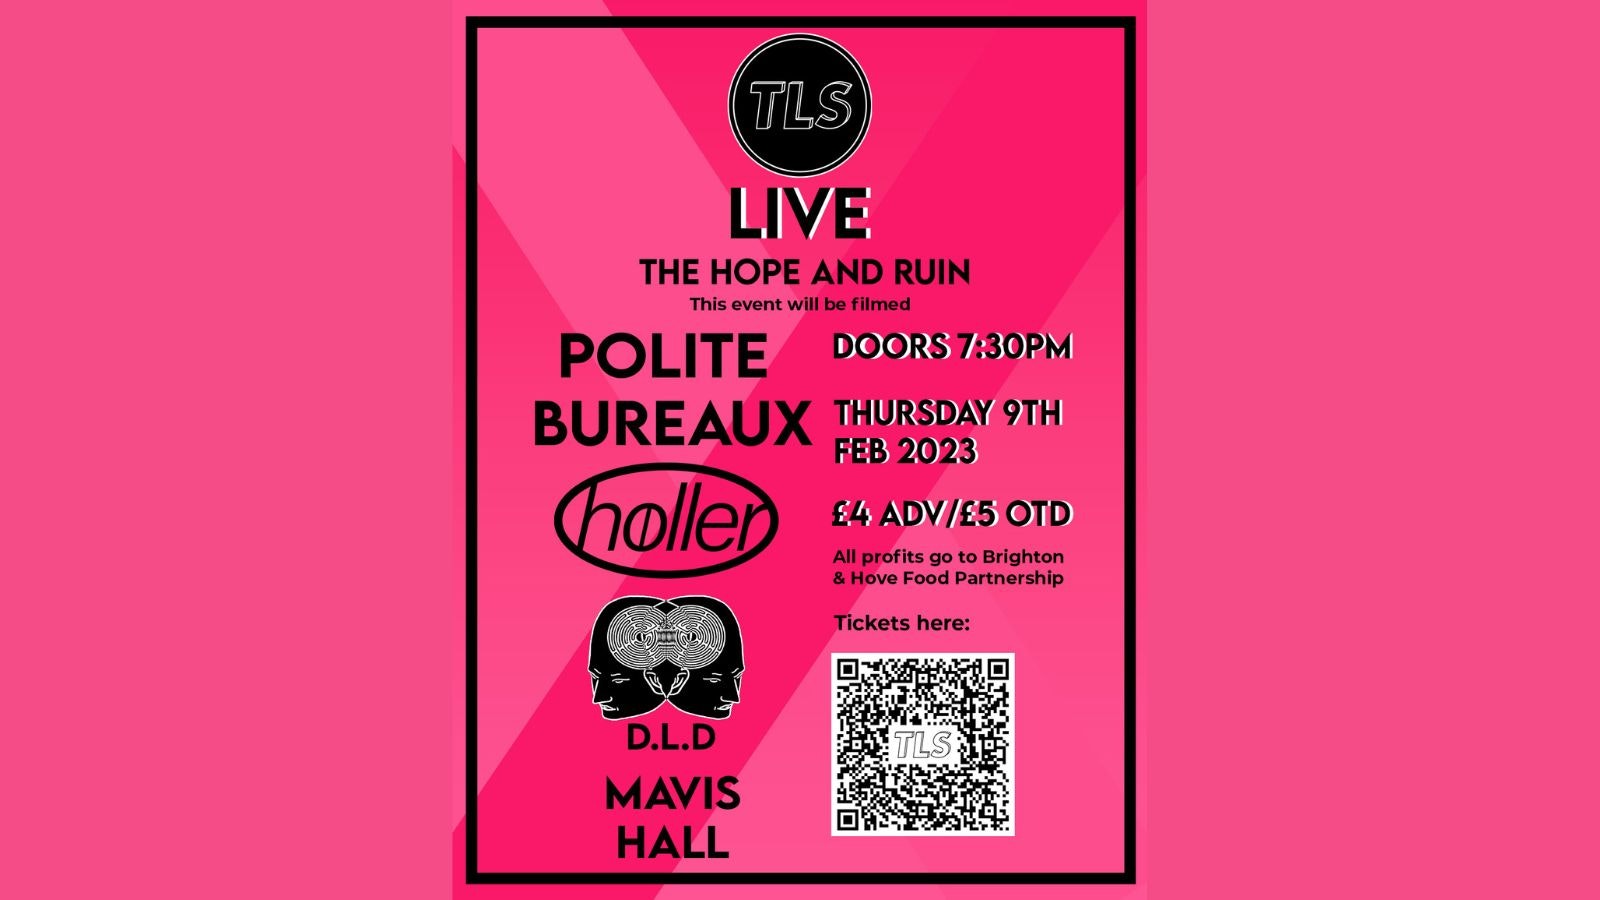 TLS Live: Polite Bureaux/ holler / D.L.D / Mavis Hall